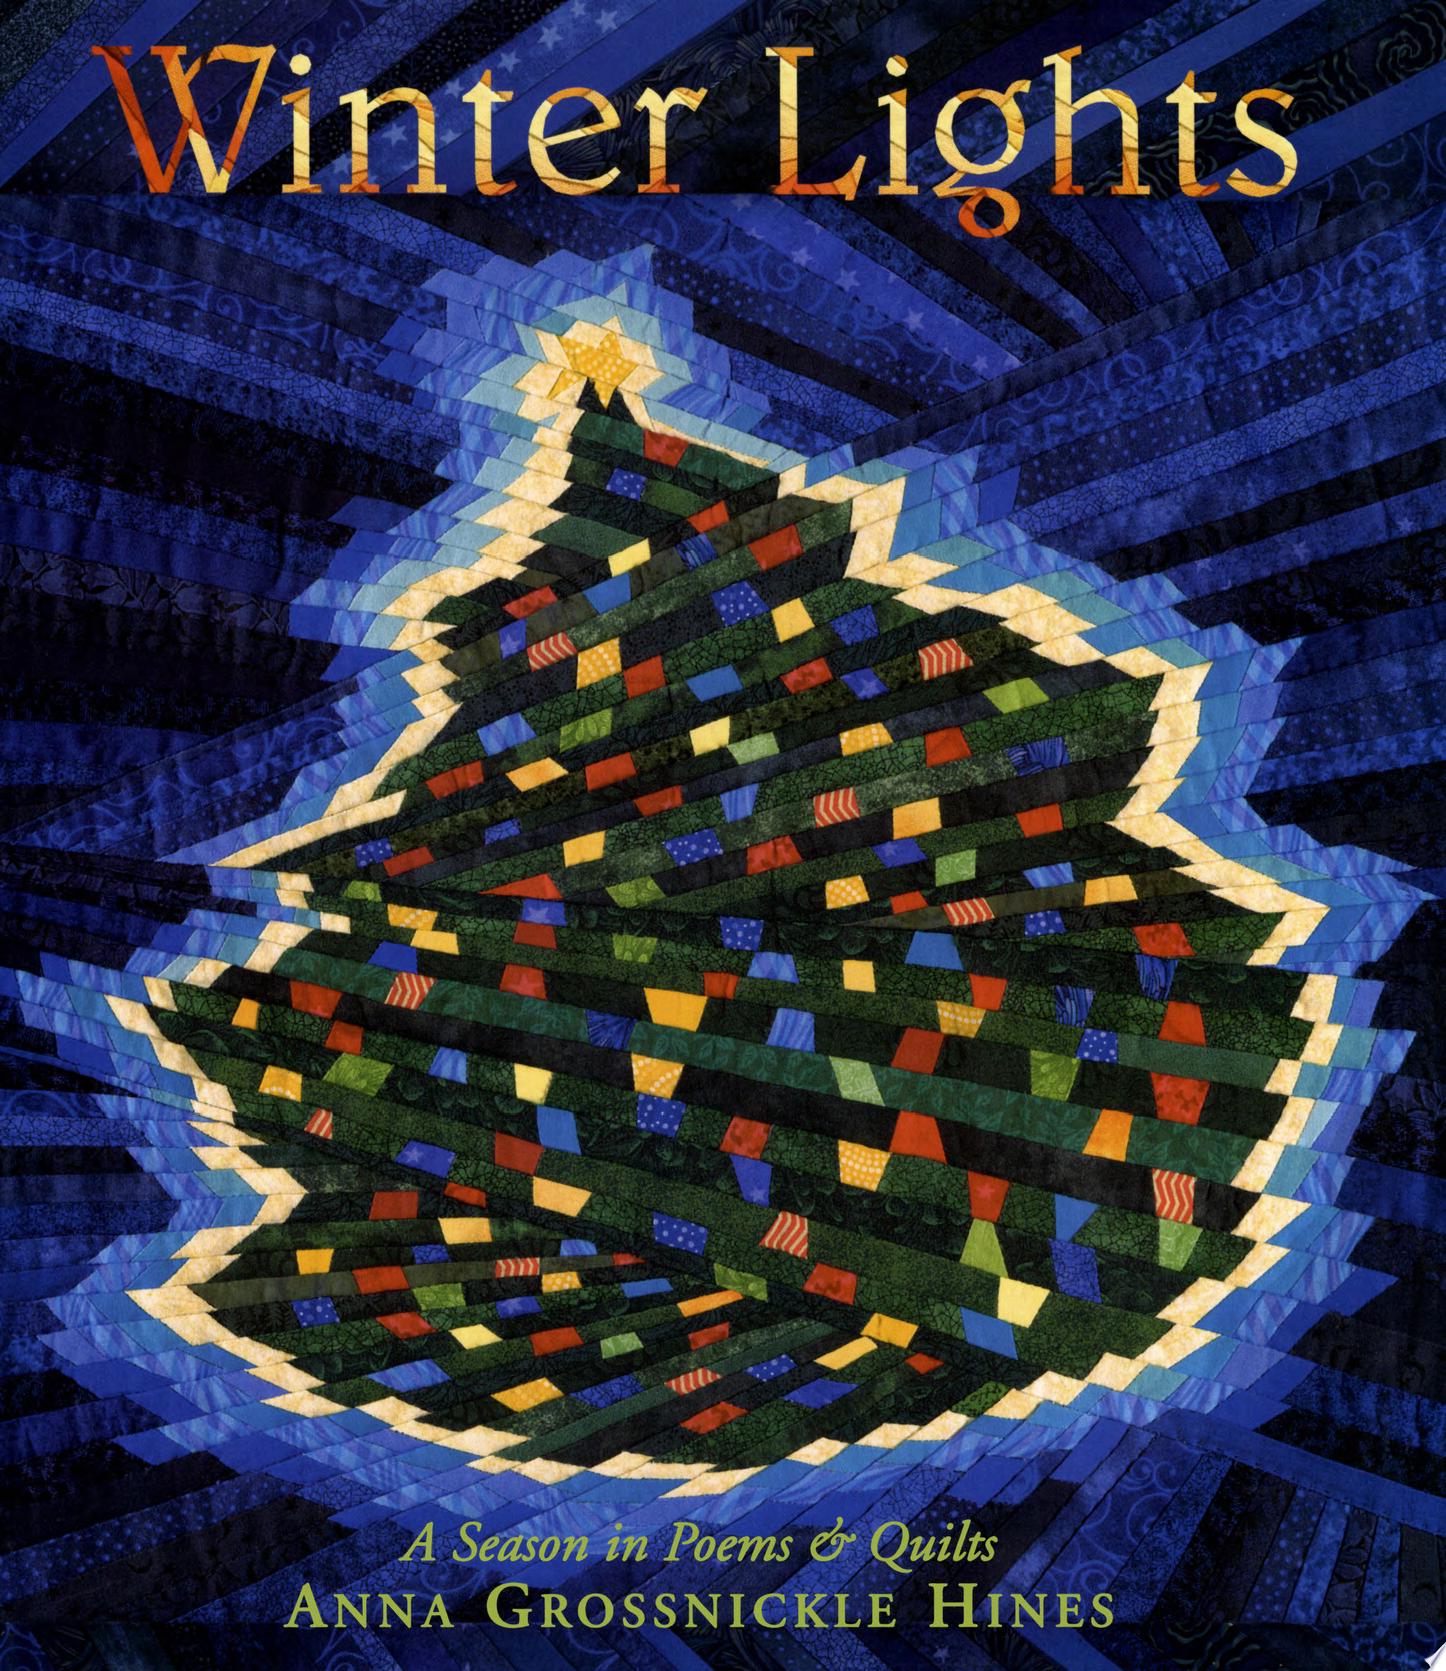 Image for "Winter Lights"